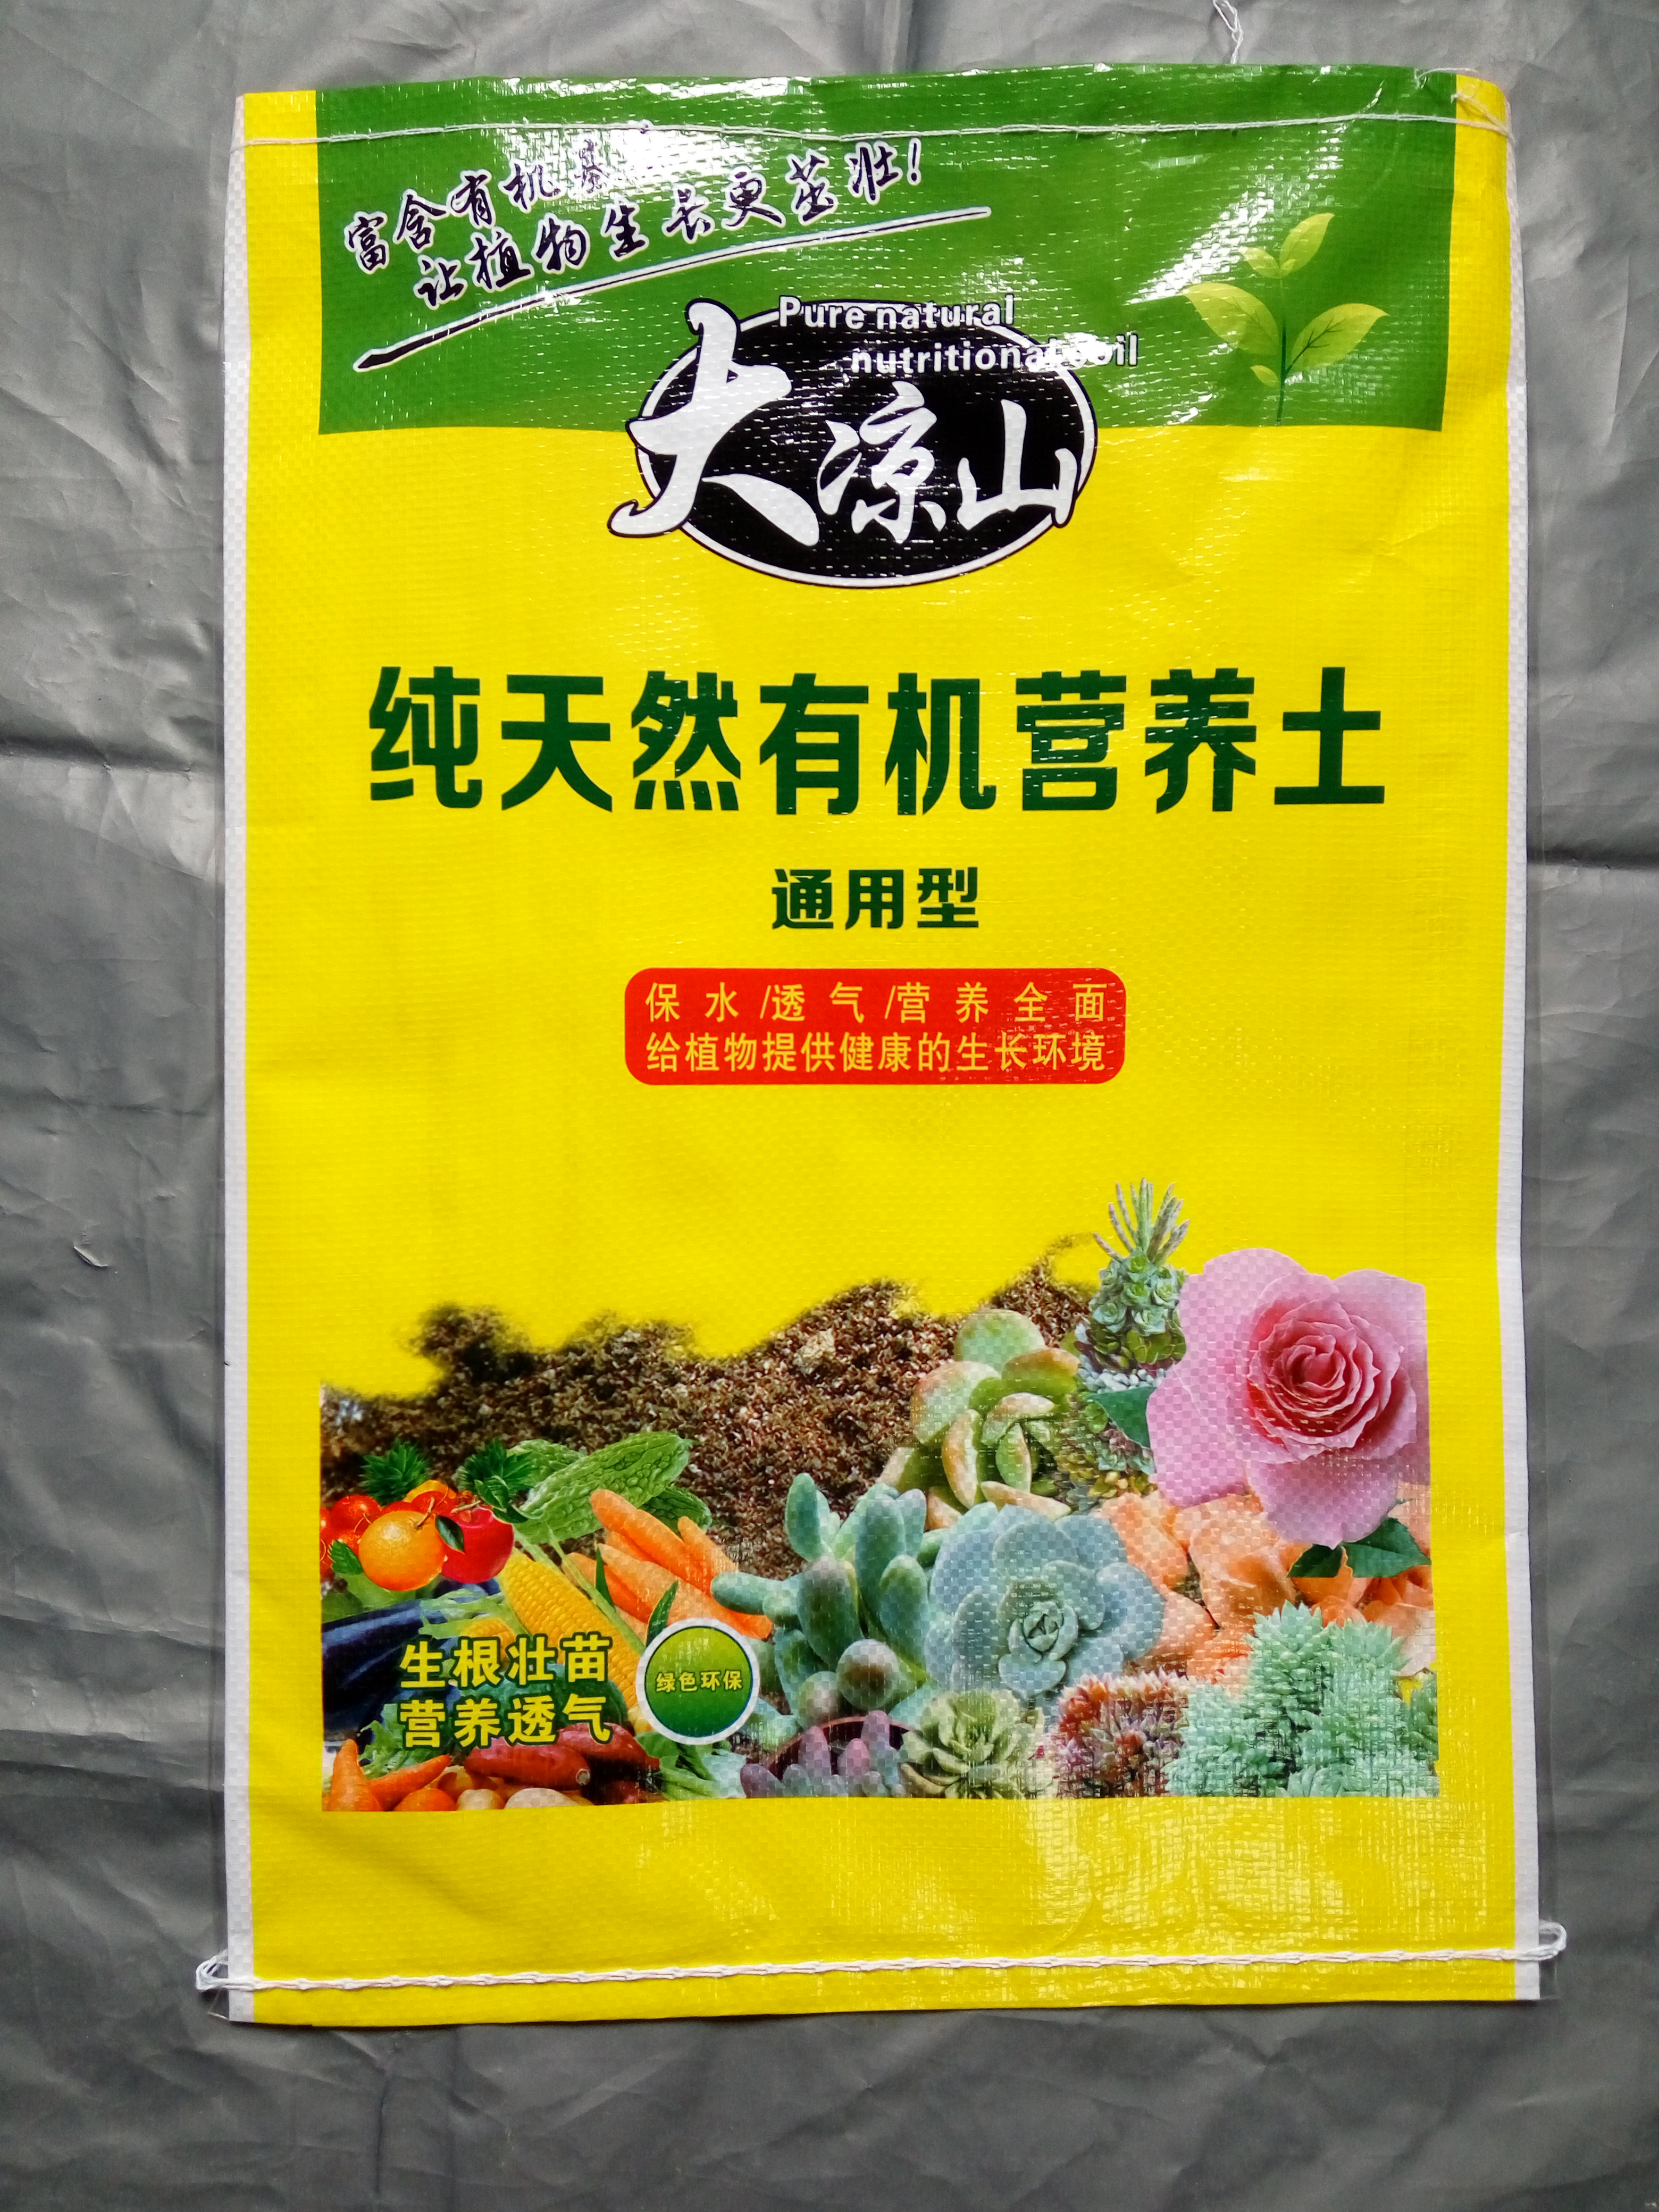 15kg营养土彩印编织袋营养土编织袋厂家营养土外包装袋价格成都图片